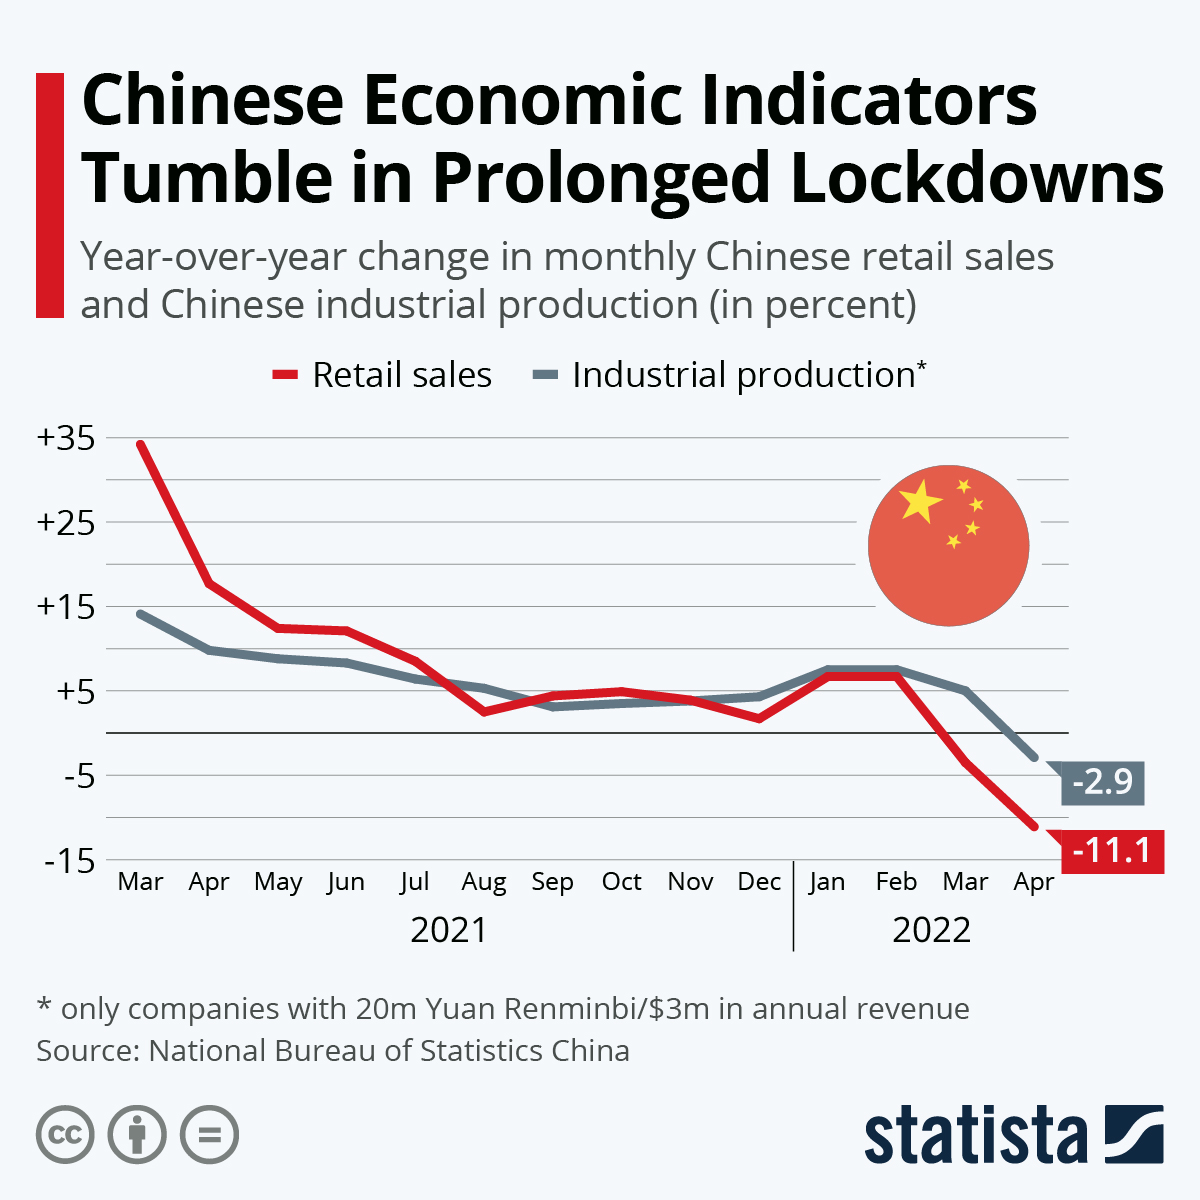 China's Economy Struggles Due to Prolonged Lockdowns